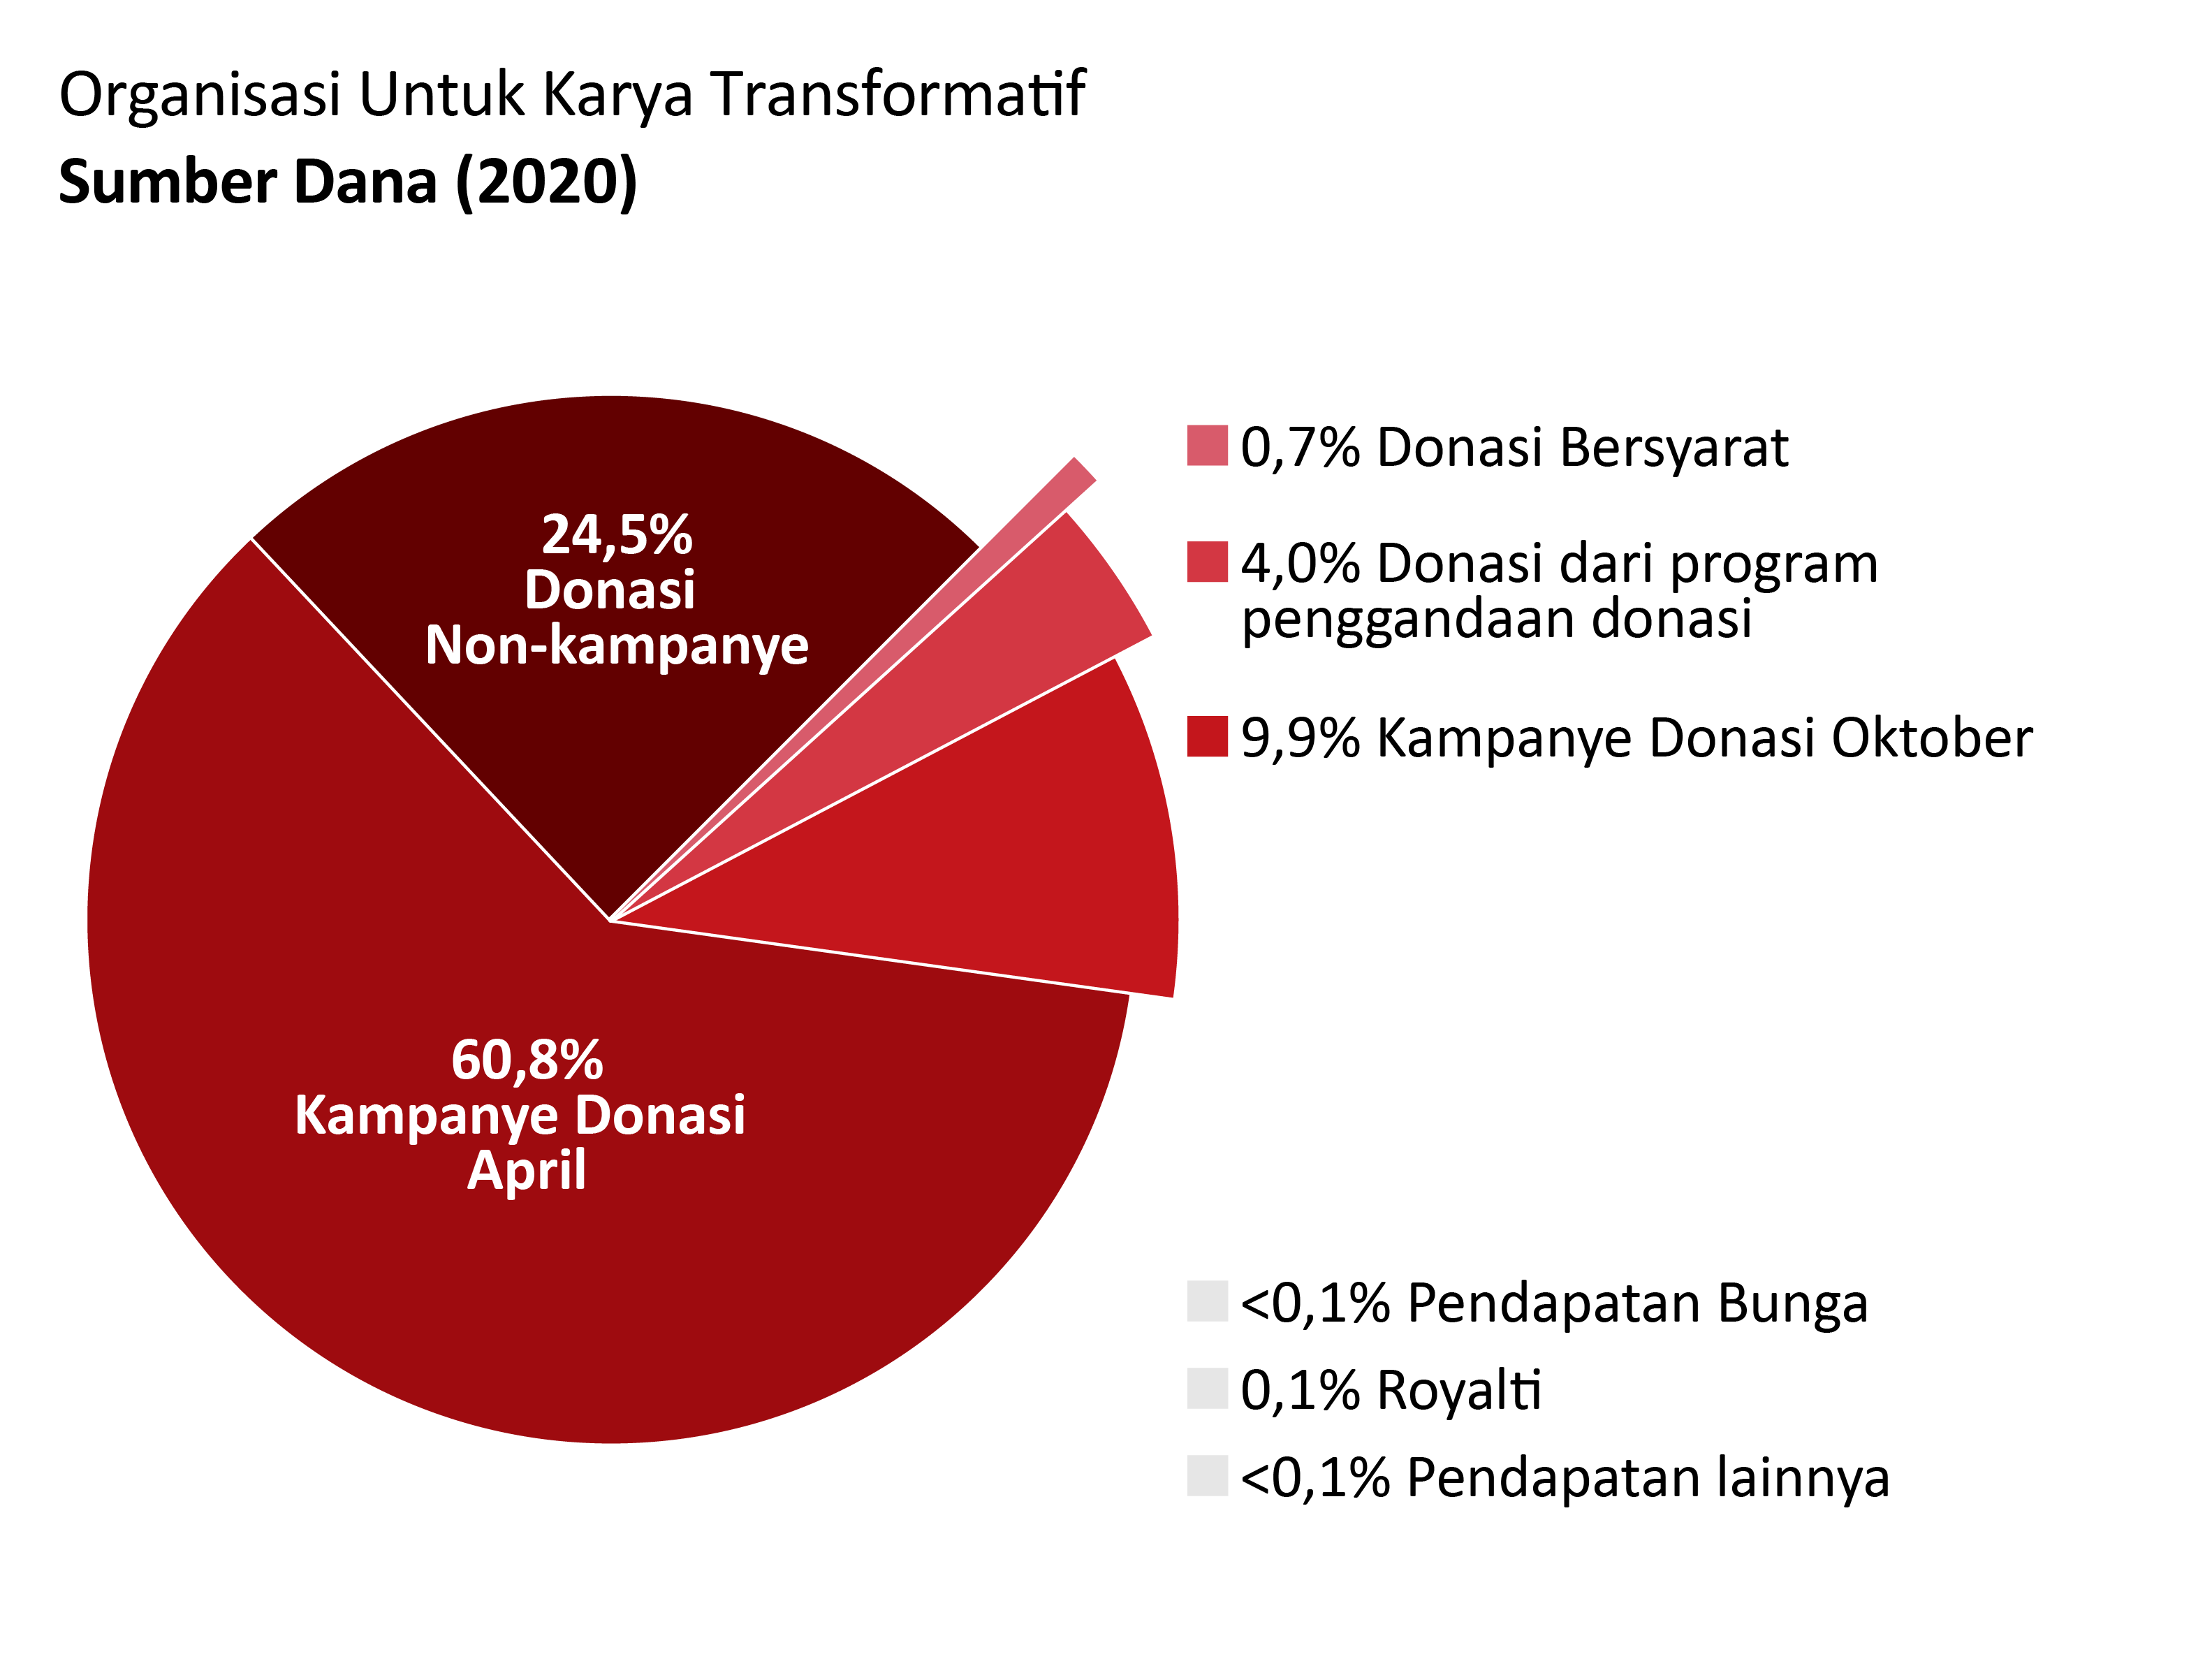 Pendapatan OTW: Donasi kampanye April: 60,8%. Donasi kampanye October: 9,9%. Donasi non-kampanye: 24,5%. Donasi dari program penggandaan donasi: 4,0%. Pendapatan bunga: <0,1%. Royalti: 0,1%. Pendapatan lain: <0,1%. Donasi bersyarat: 0,7%